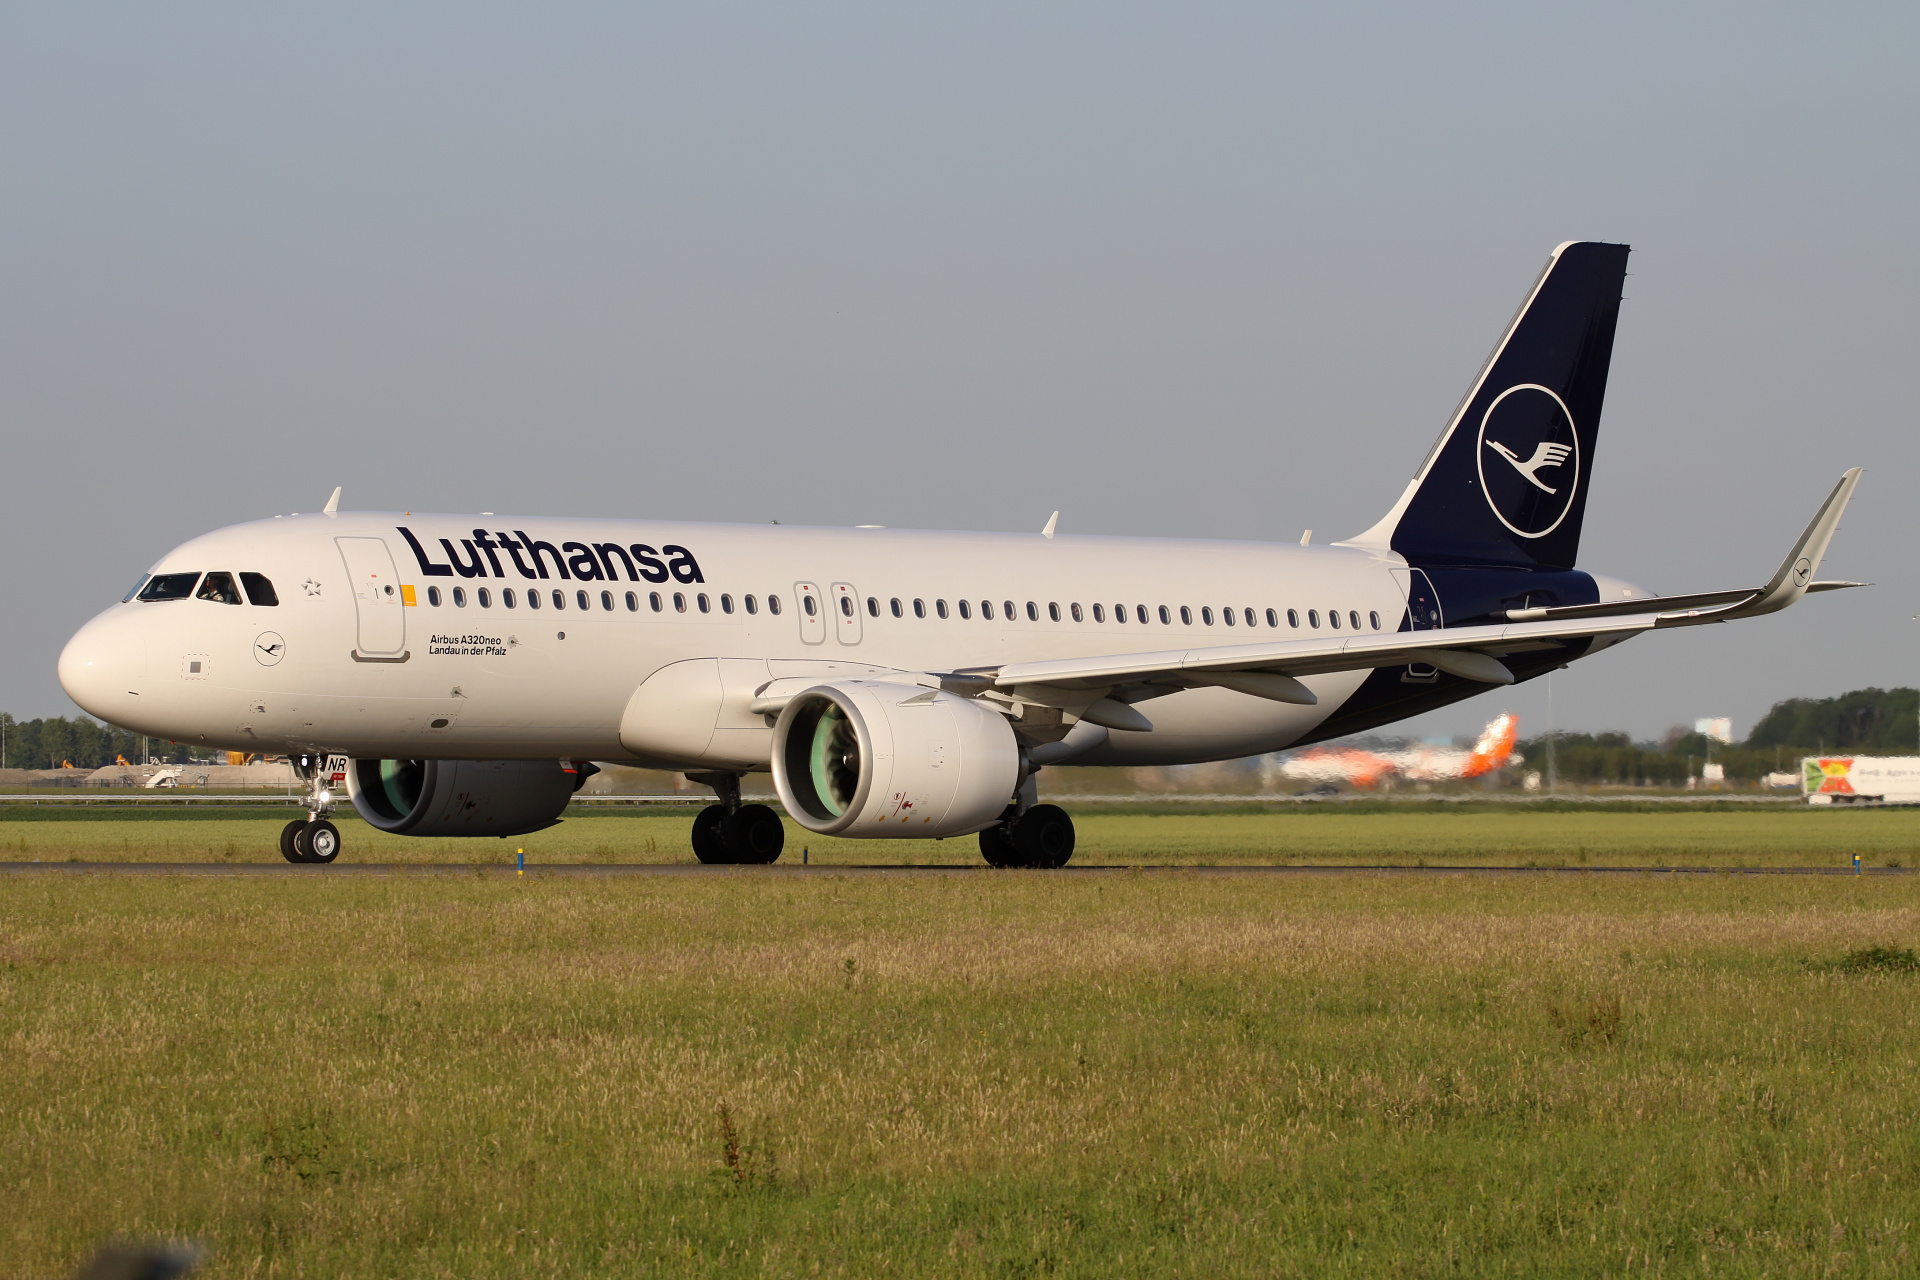 D-AINR, Lufthansa (Aircraft » Schiphol Spotting » Airbus A320neo)